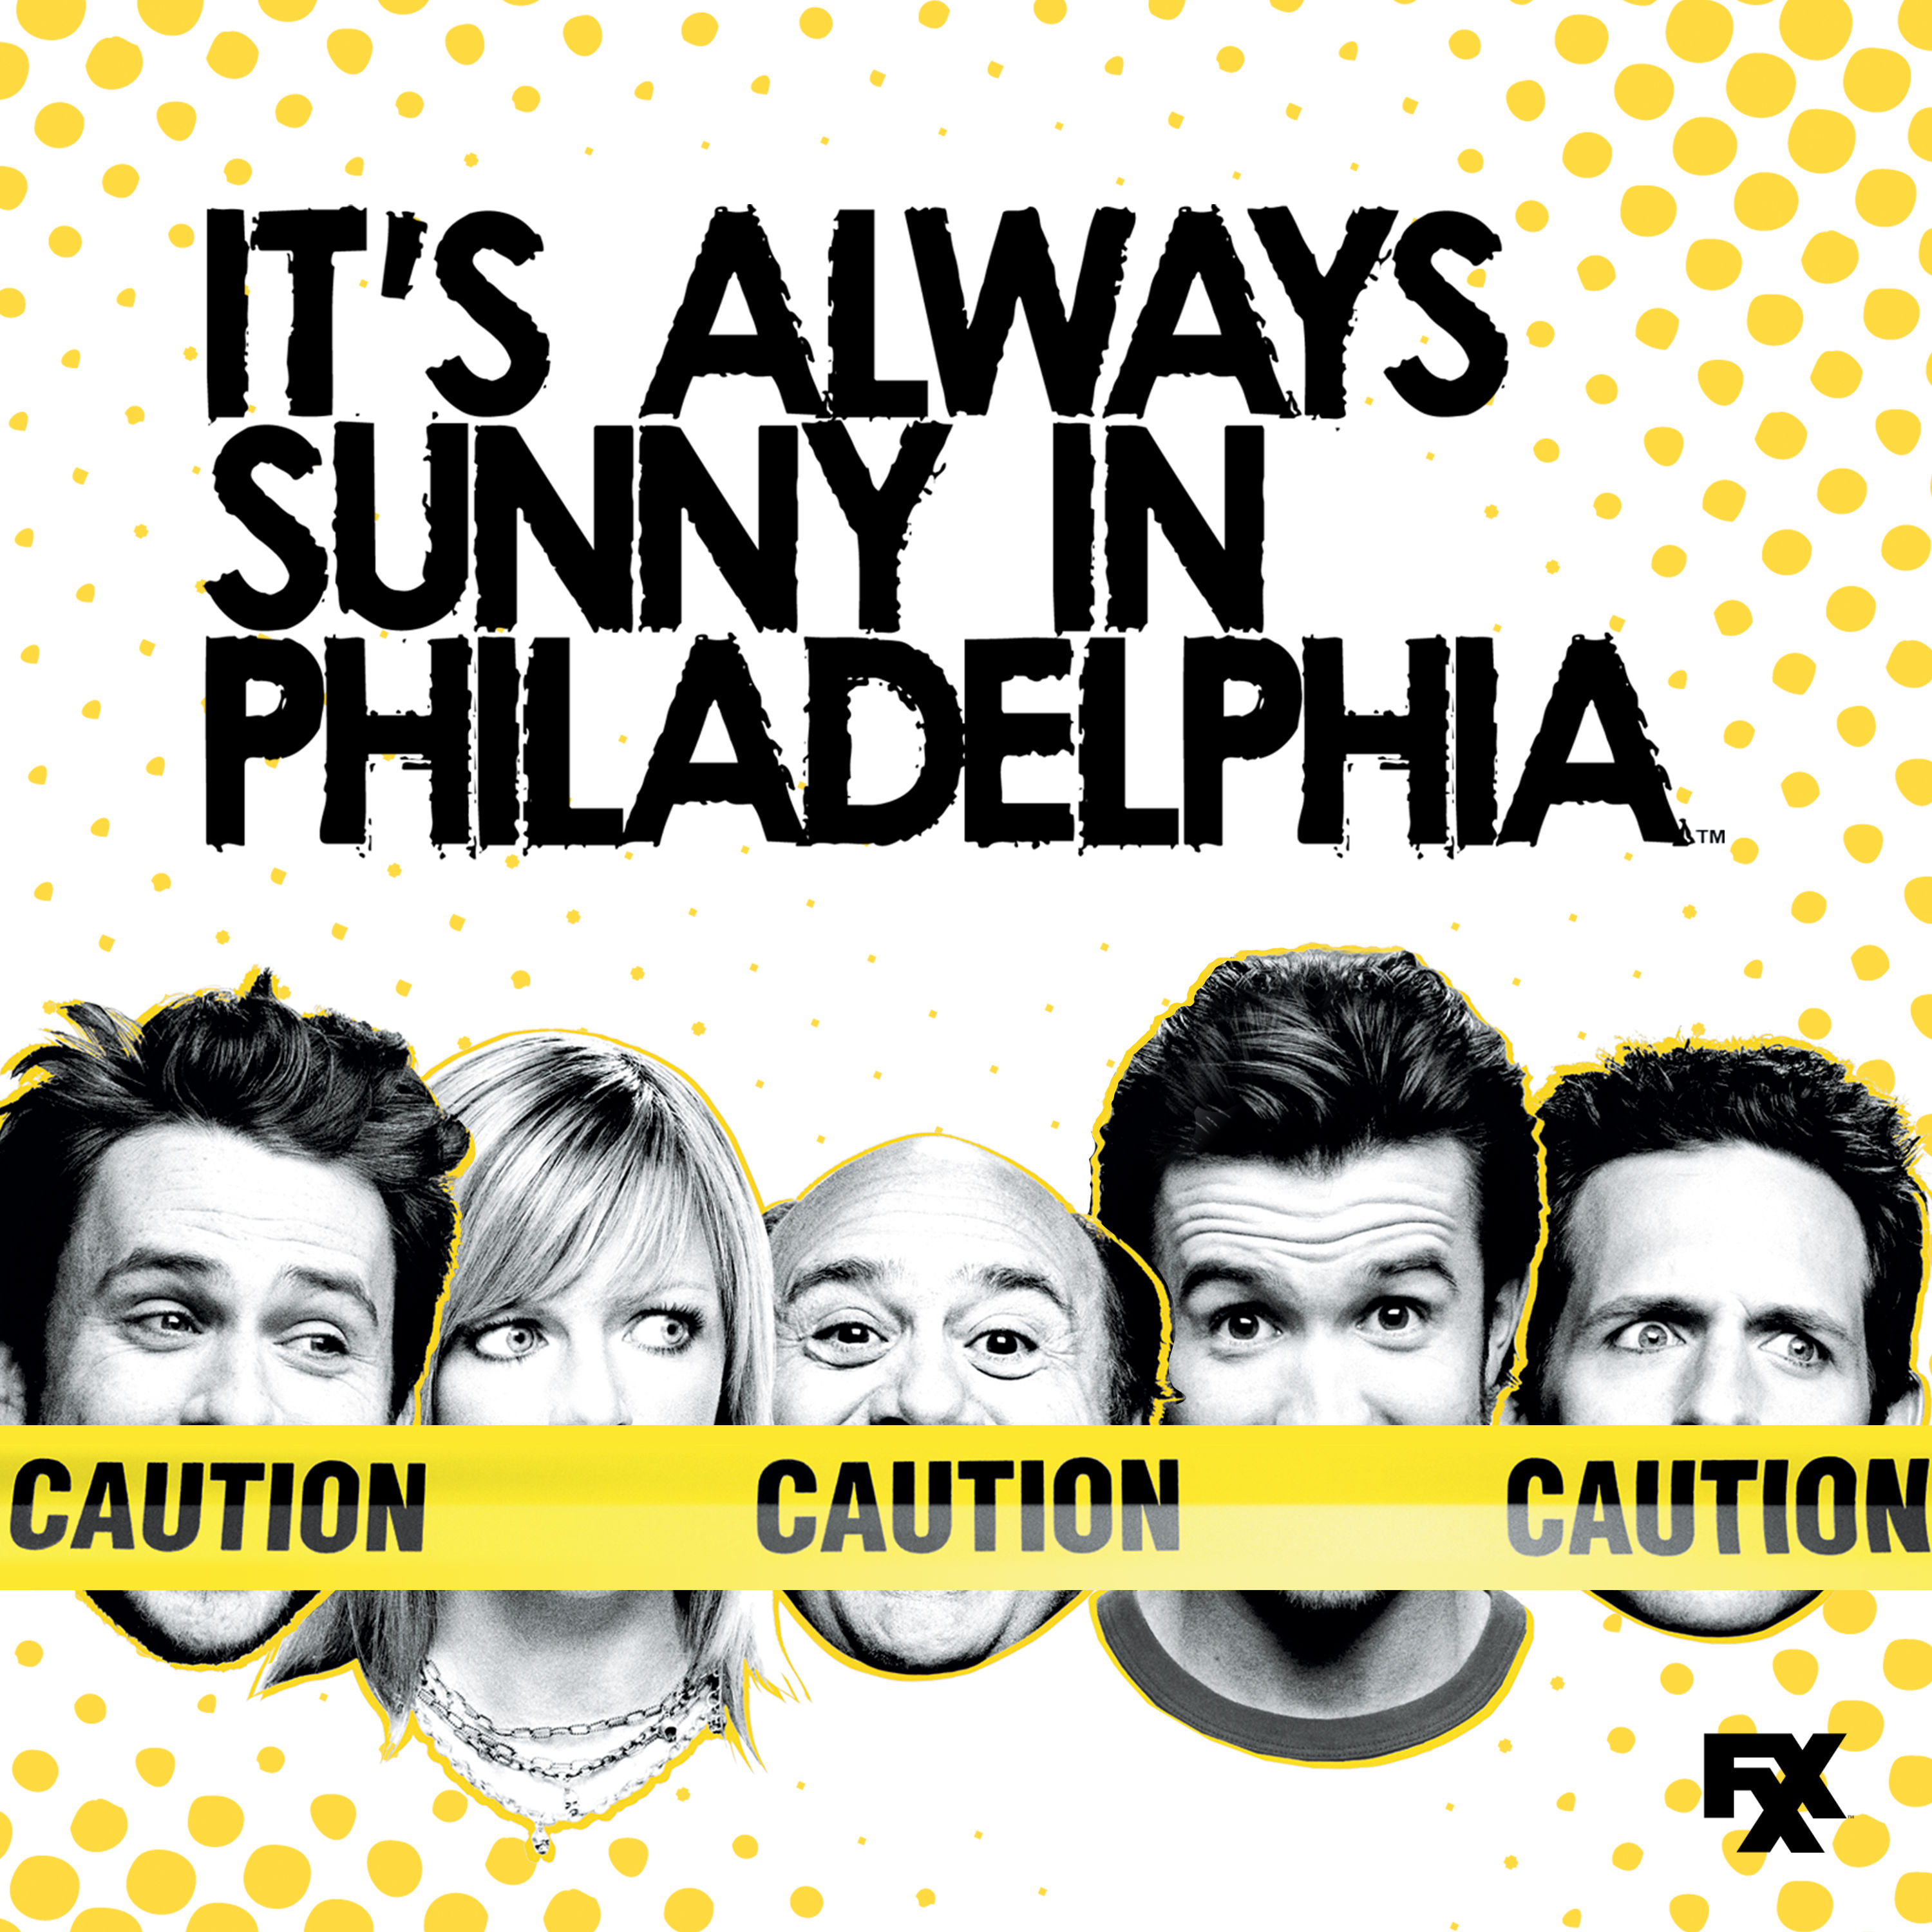 It's Always Sunny in Philadelphia (season 3) - Wikipedia